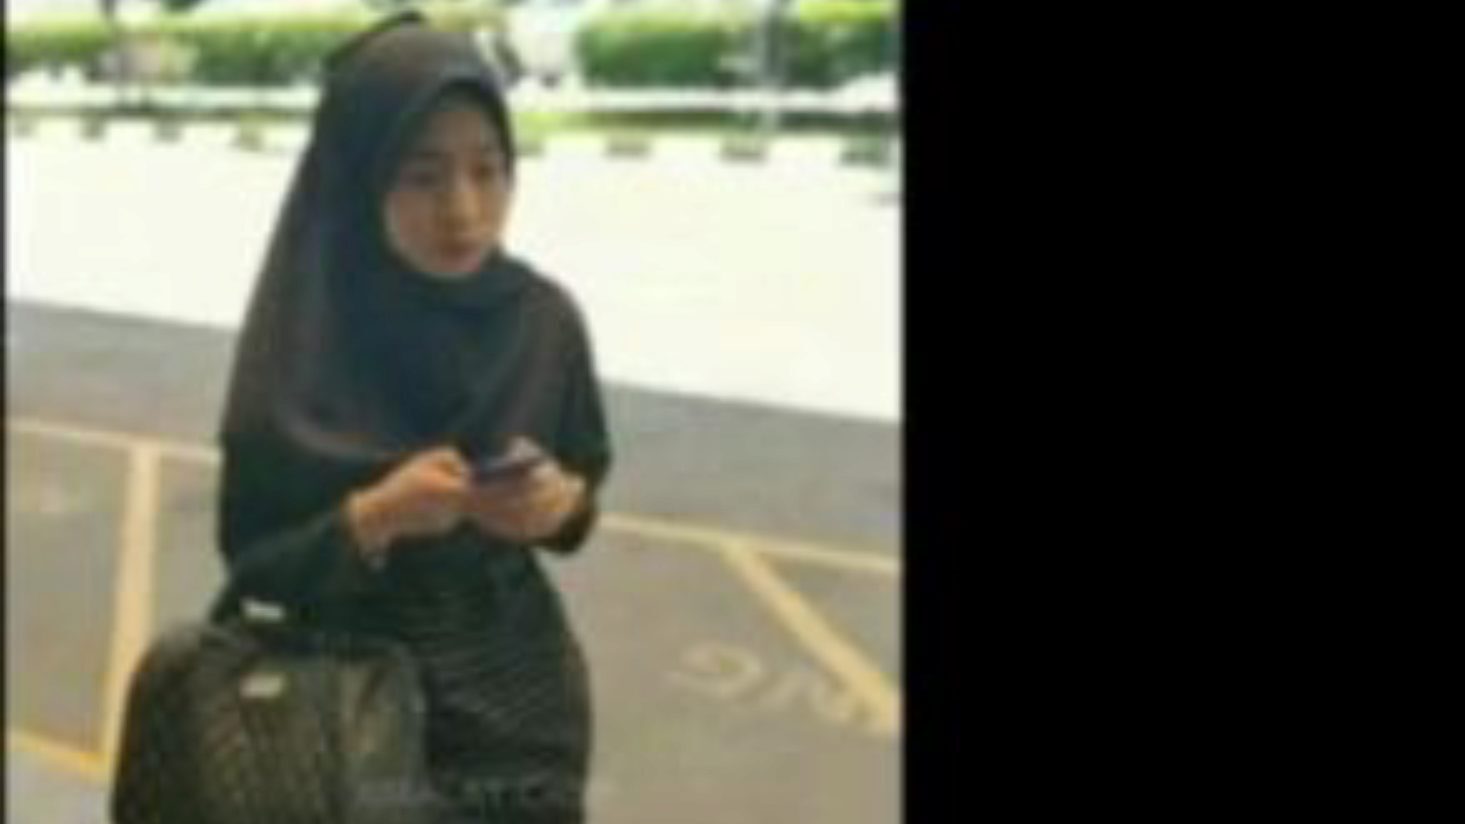 Malaysian nude teen jilbab